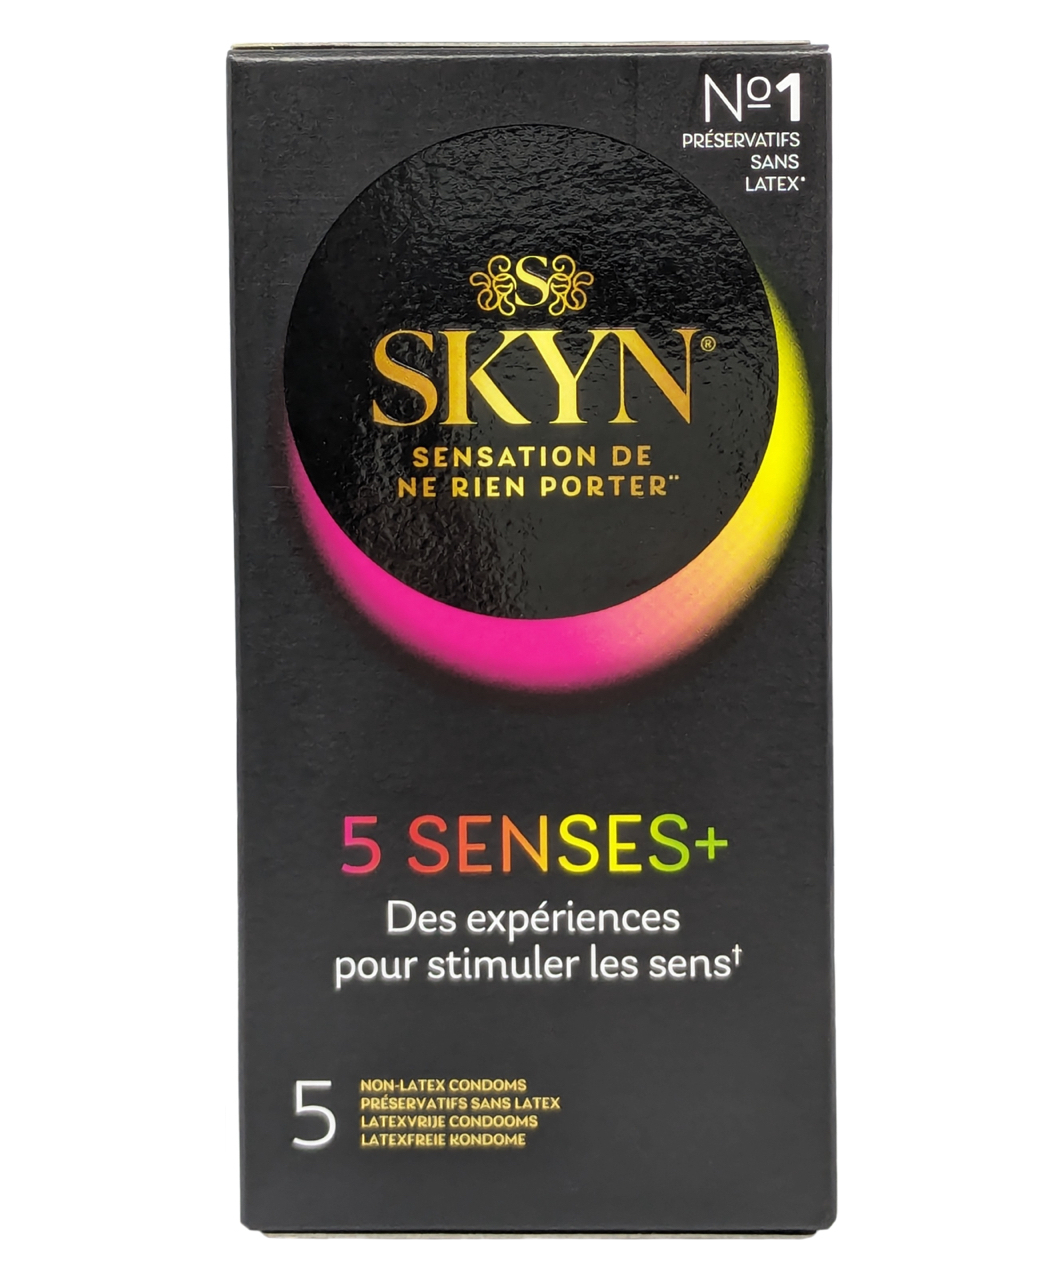 SKYN 5 Senses+ презервативы (5 шт.)